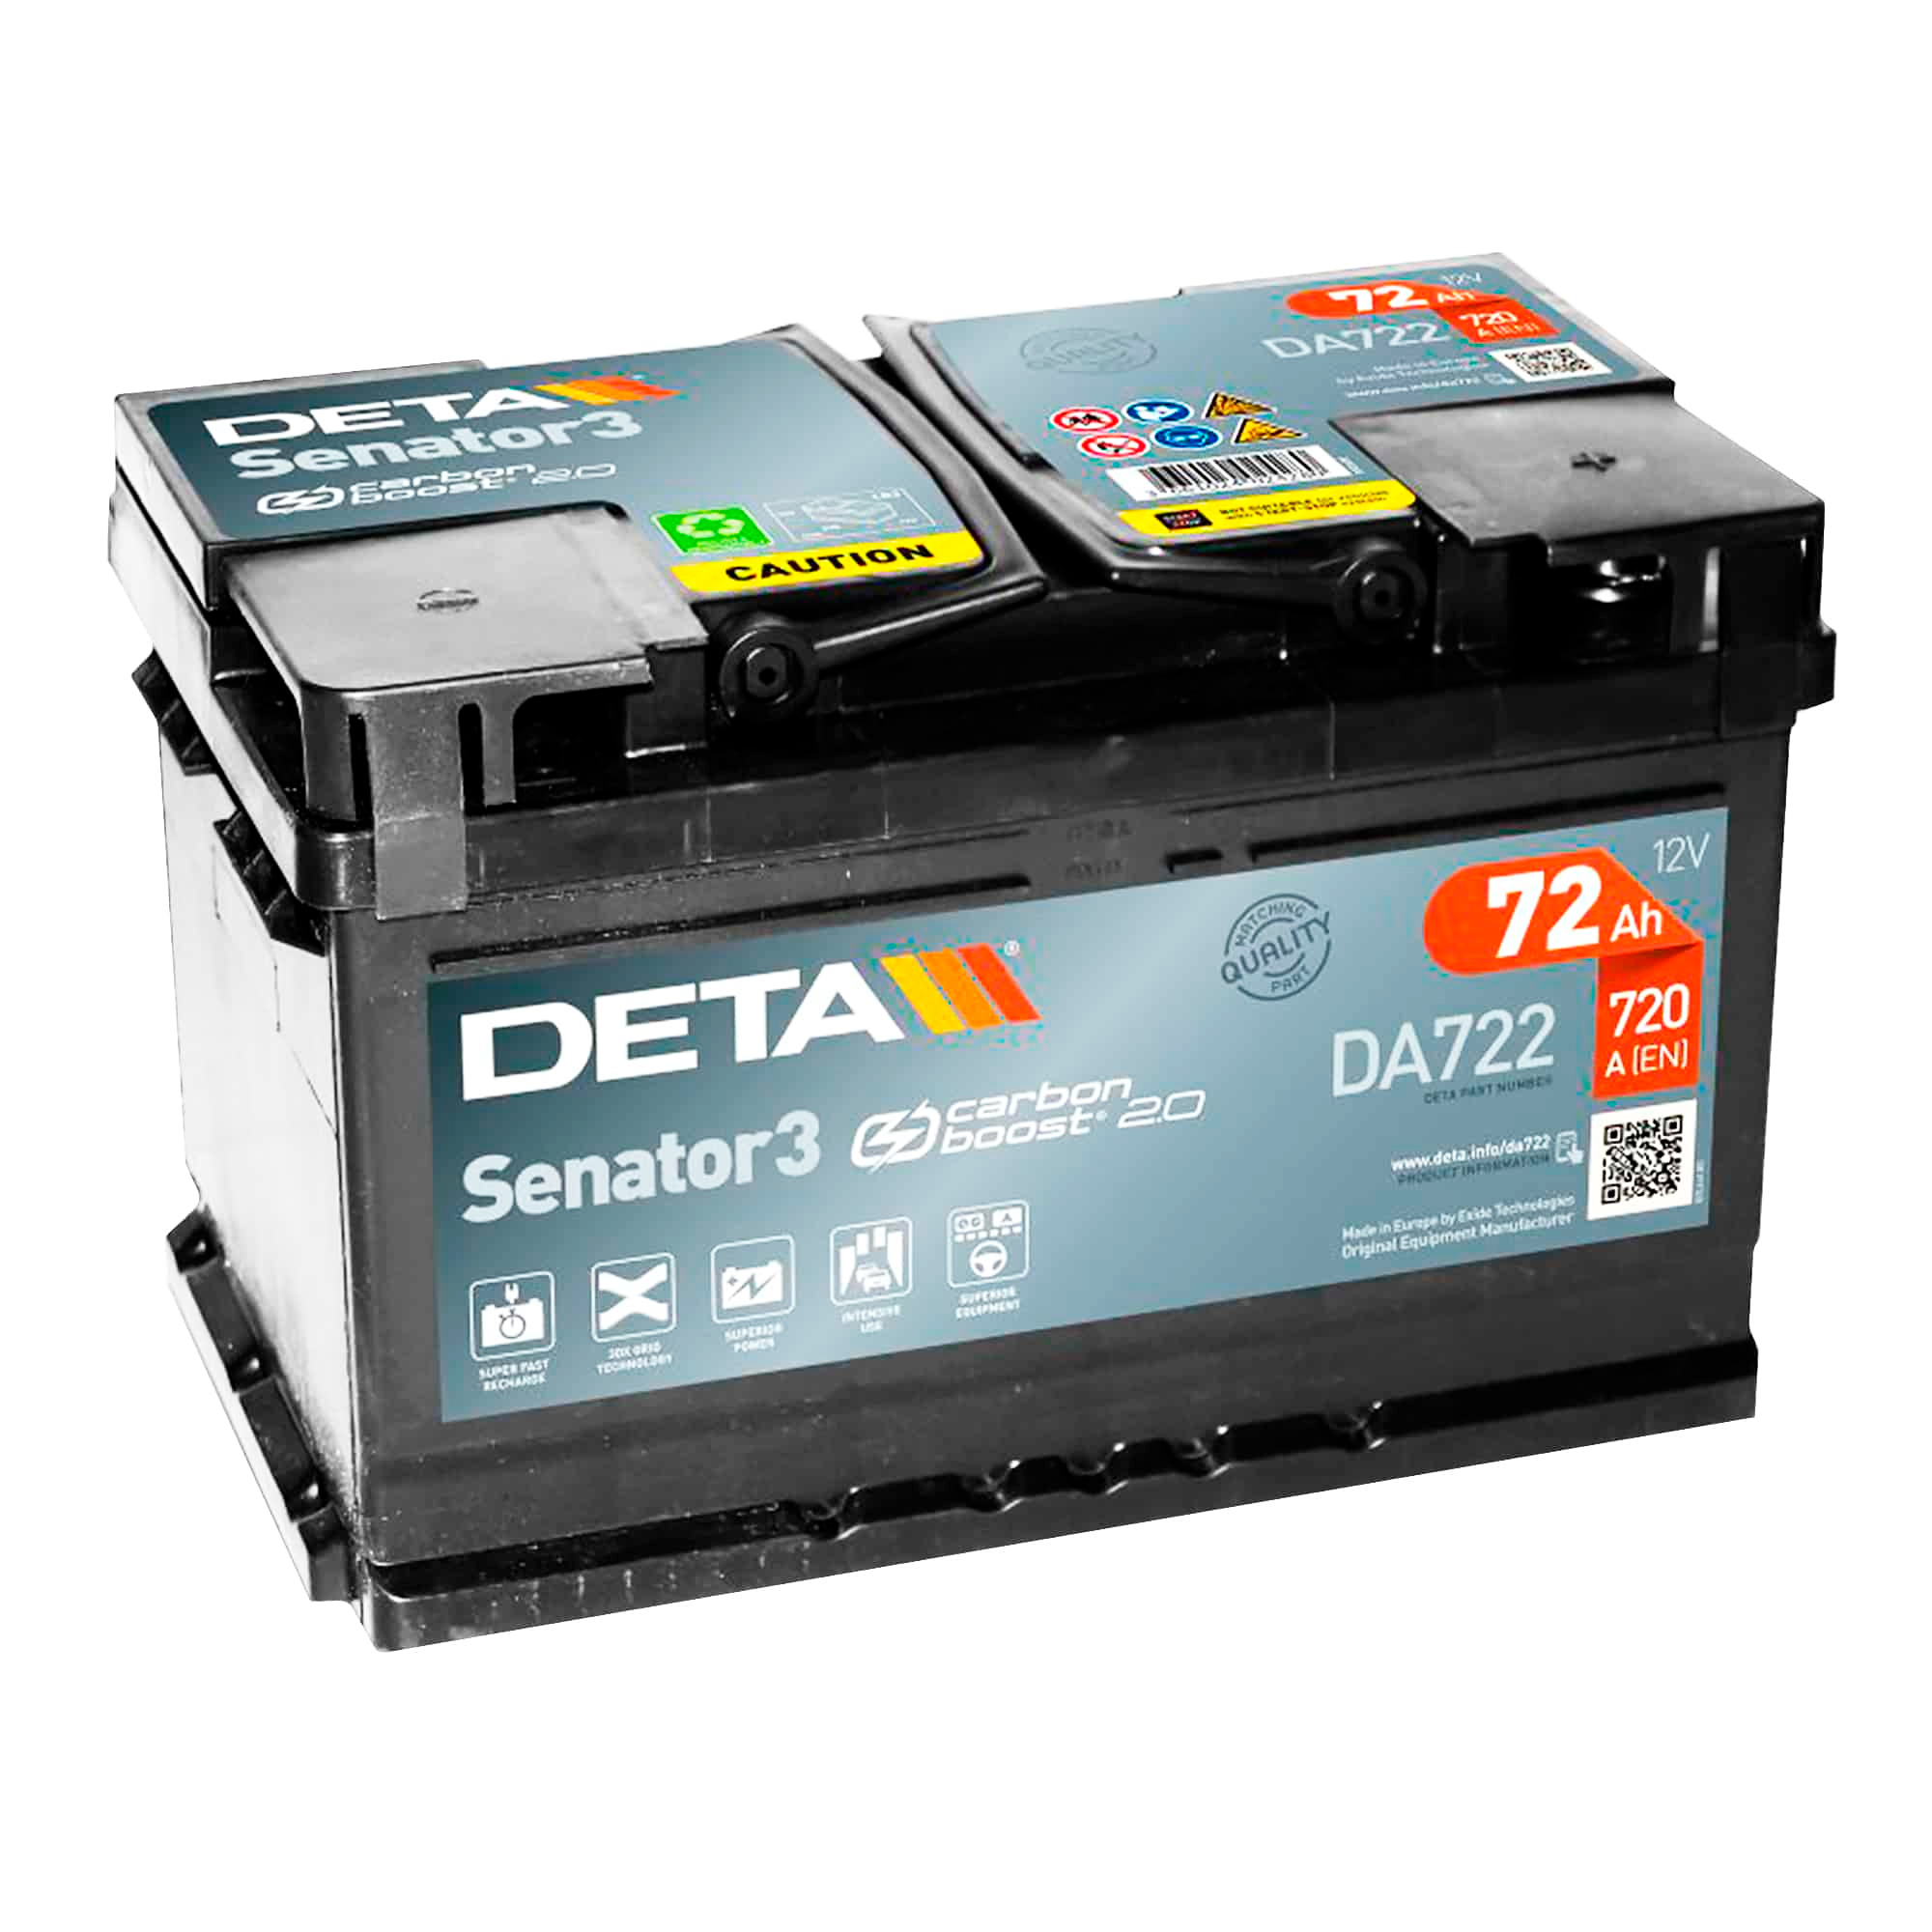 Аккумулятор DETA Senator 3 6CT-72Ah (-/+) (DA722)